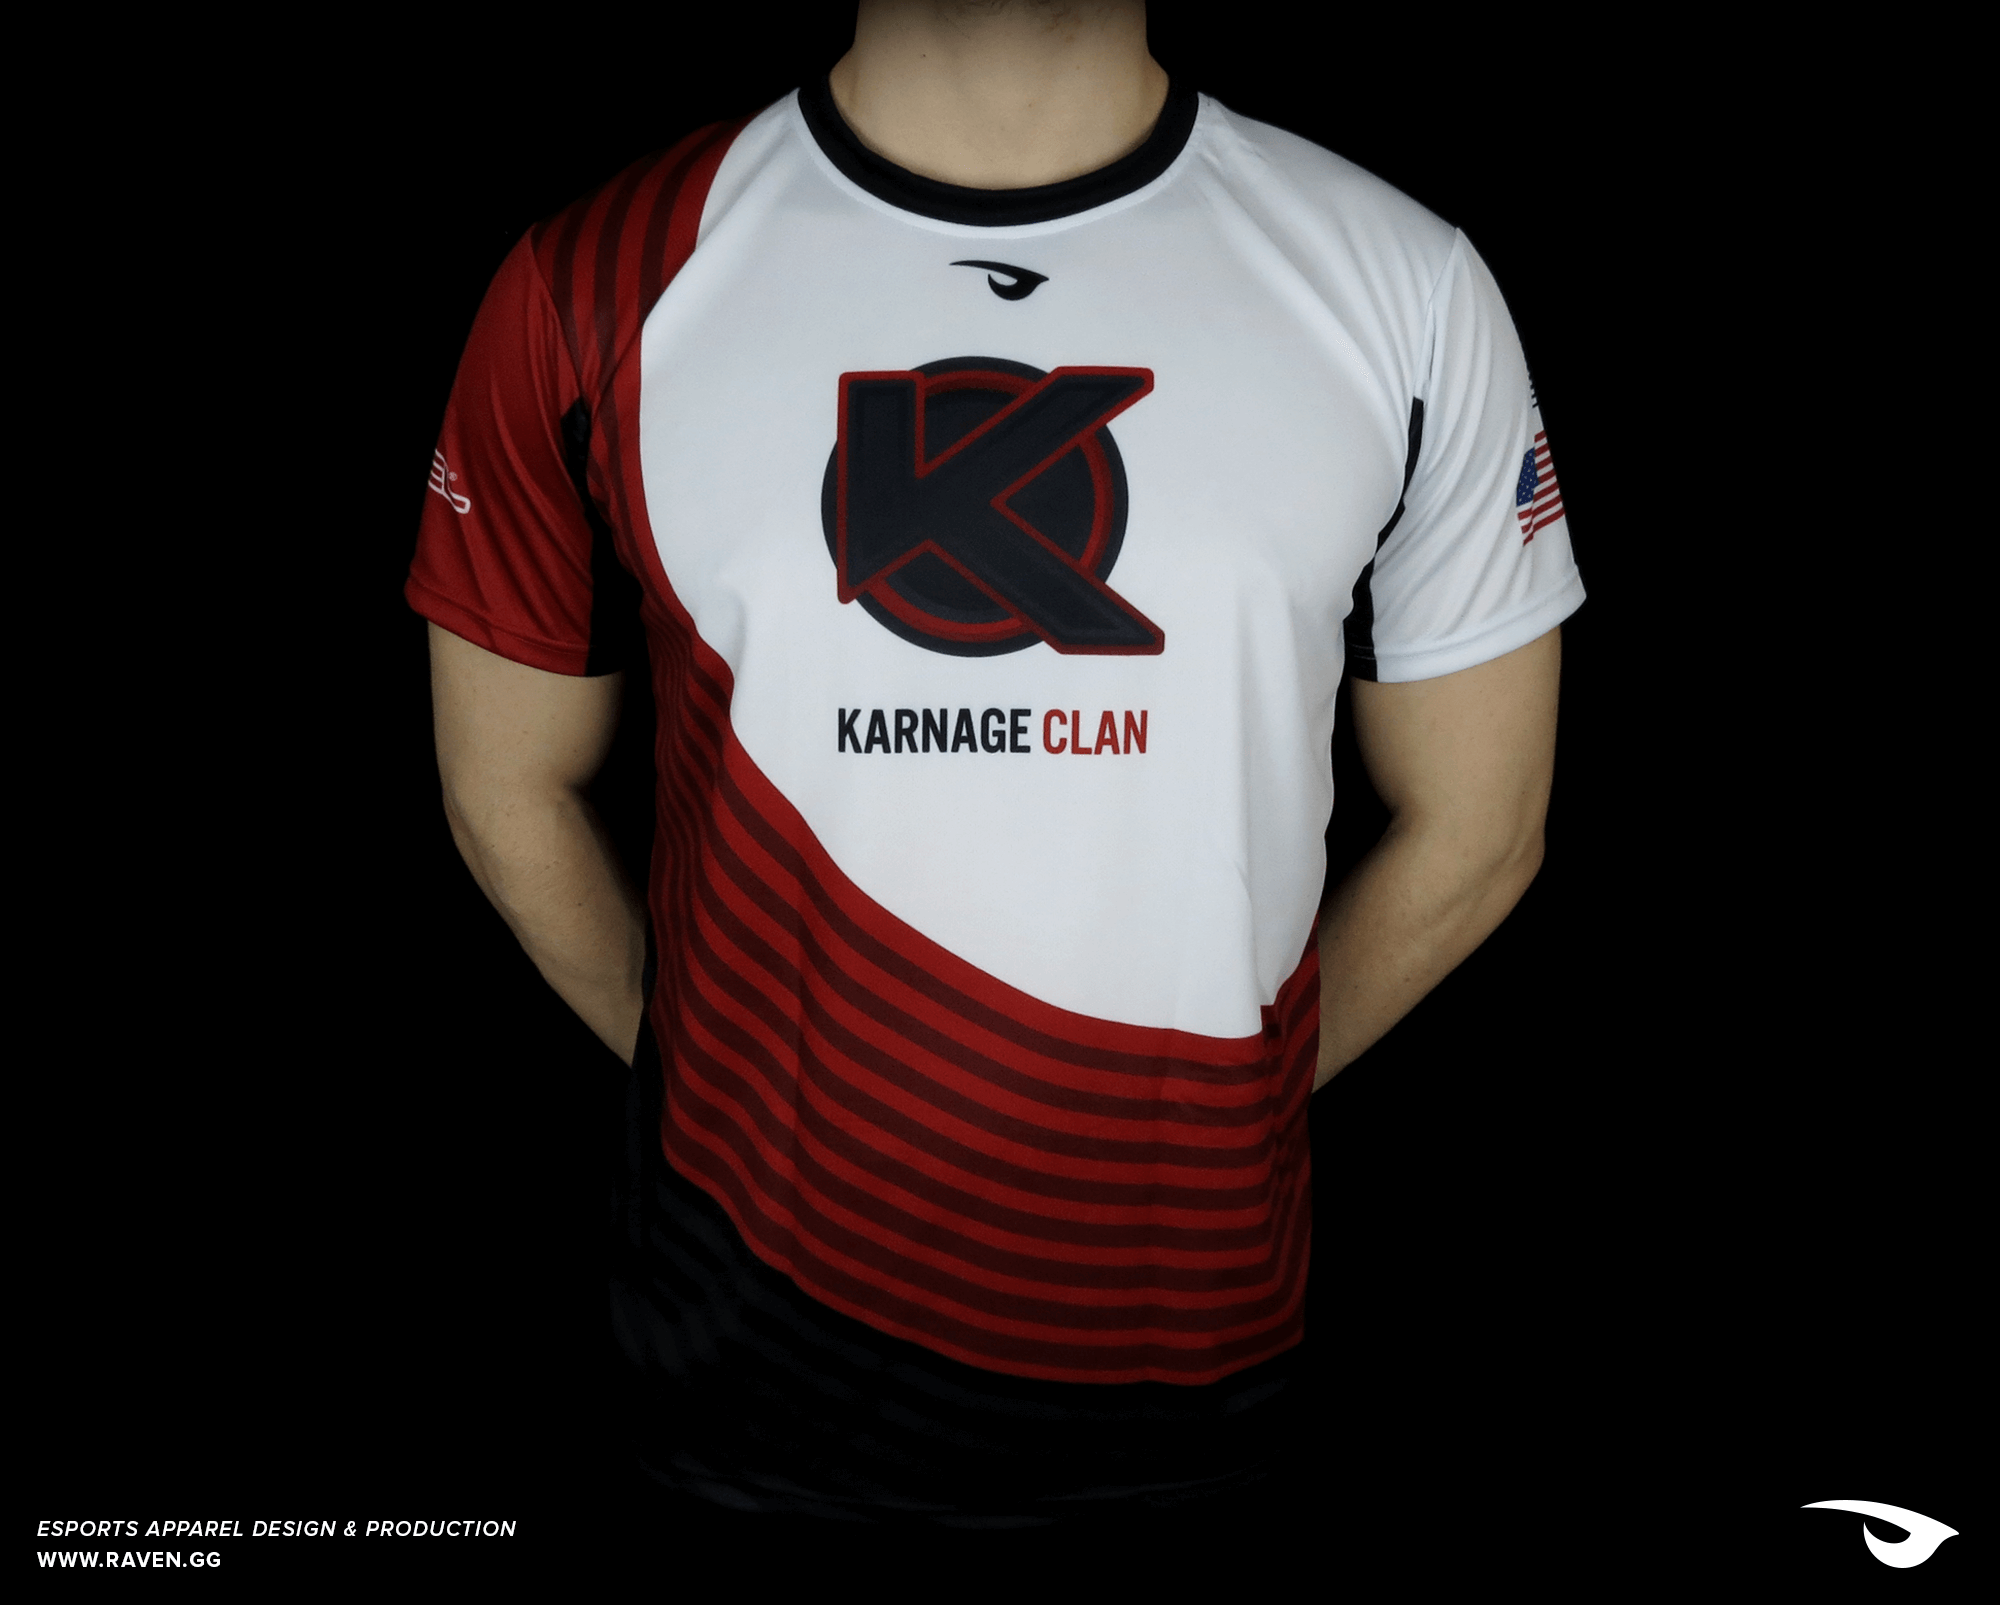 GG Clothing and Apparel Logo - karnage_jersey_shoot - Raven.GG | Esports Apparel Design & Production